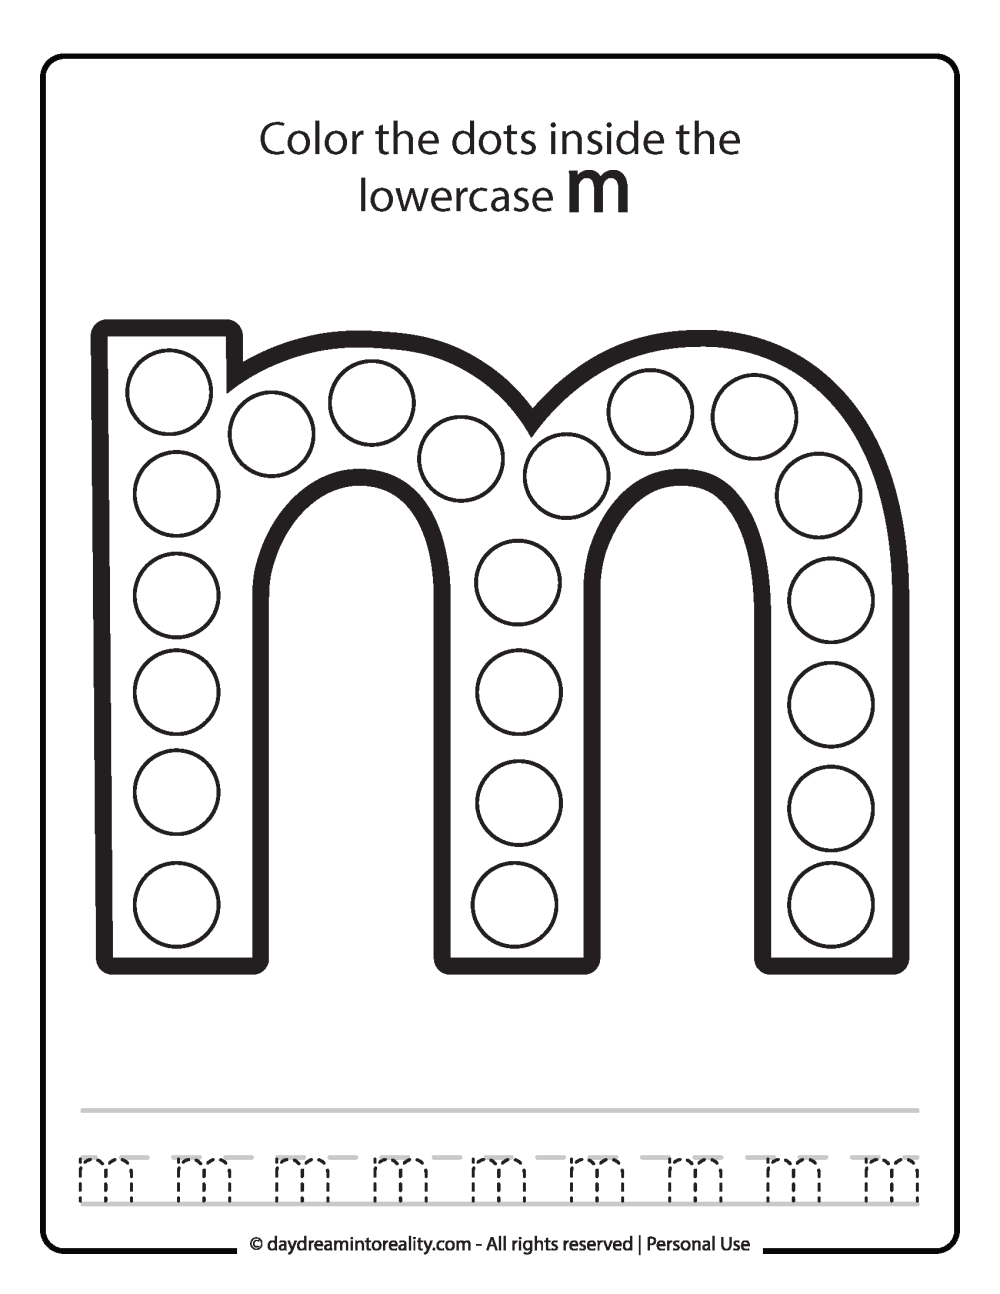 Lowercase "m" Dot Marker Worksheet Free Printable activity for kids (preschool, kindergarten)